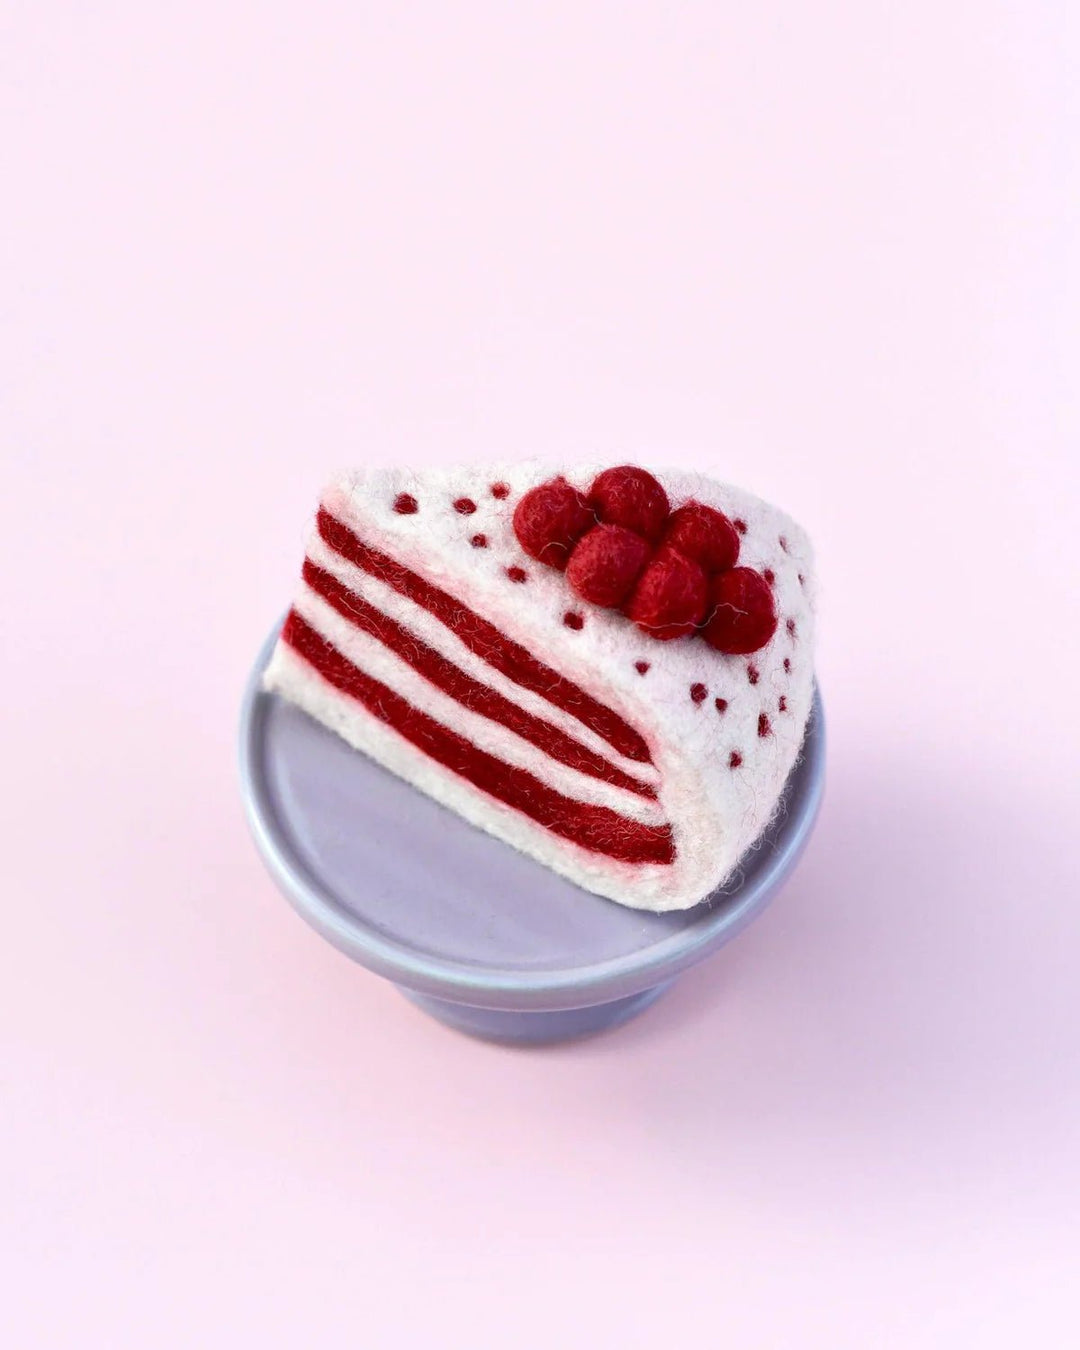 Tara Treasures Felt Red Velvet Cake Slice - #HolaNanu#NDIS #creativekids